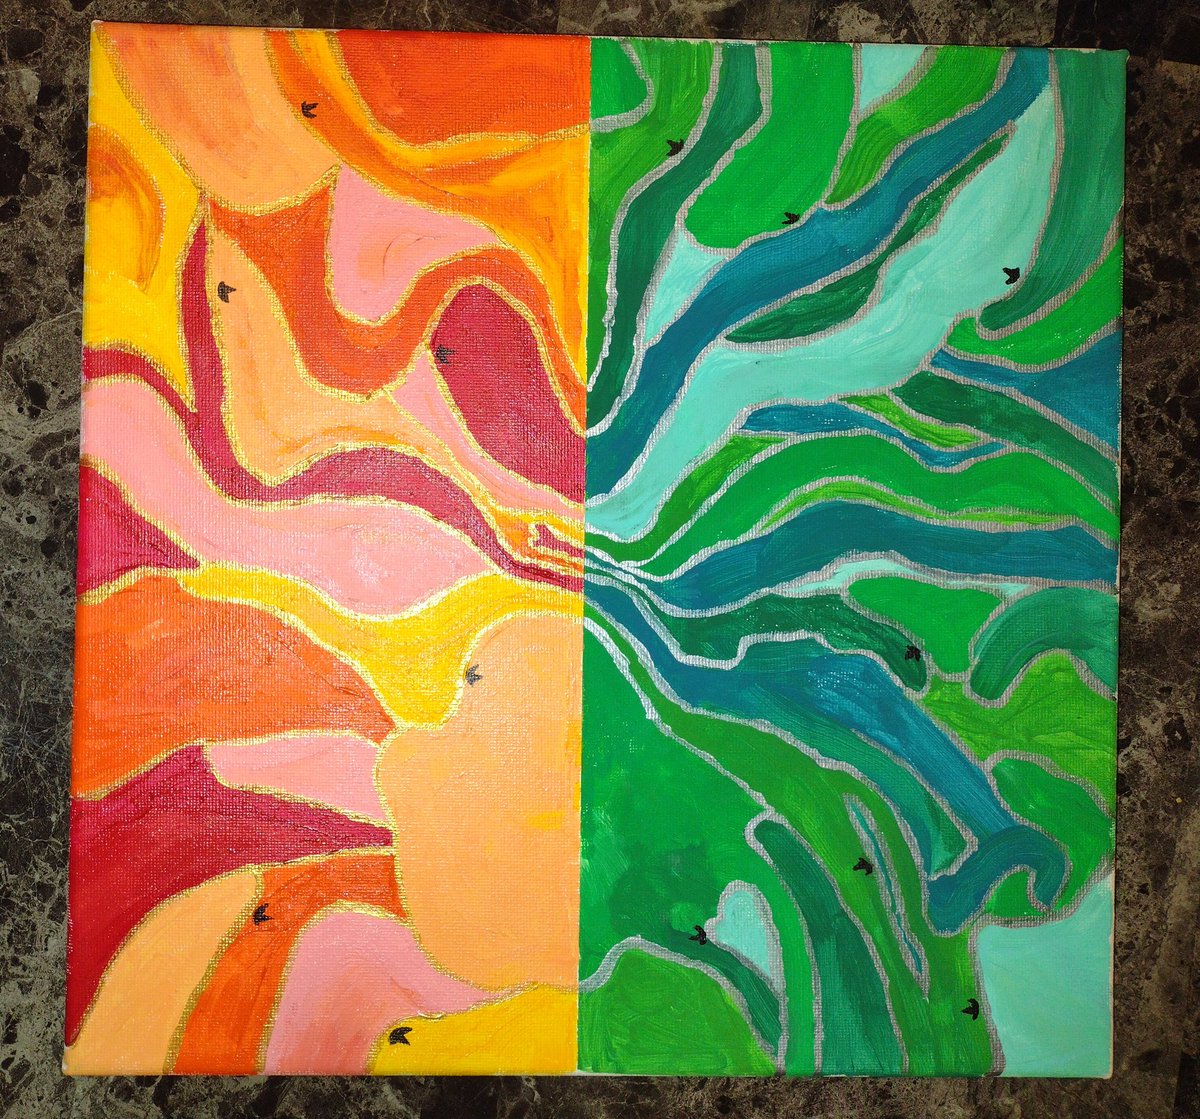 Sea/ sky
#adhdartist #ArtistOnTwitter #nonbinaryartist #acrylicpainting #Abstract #abstractpainting #queerartist